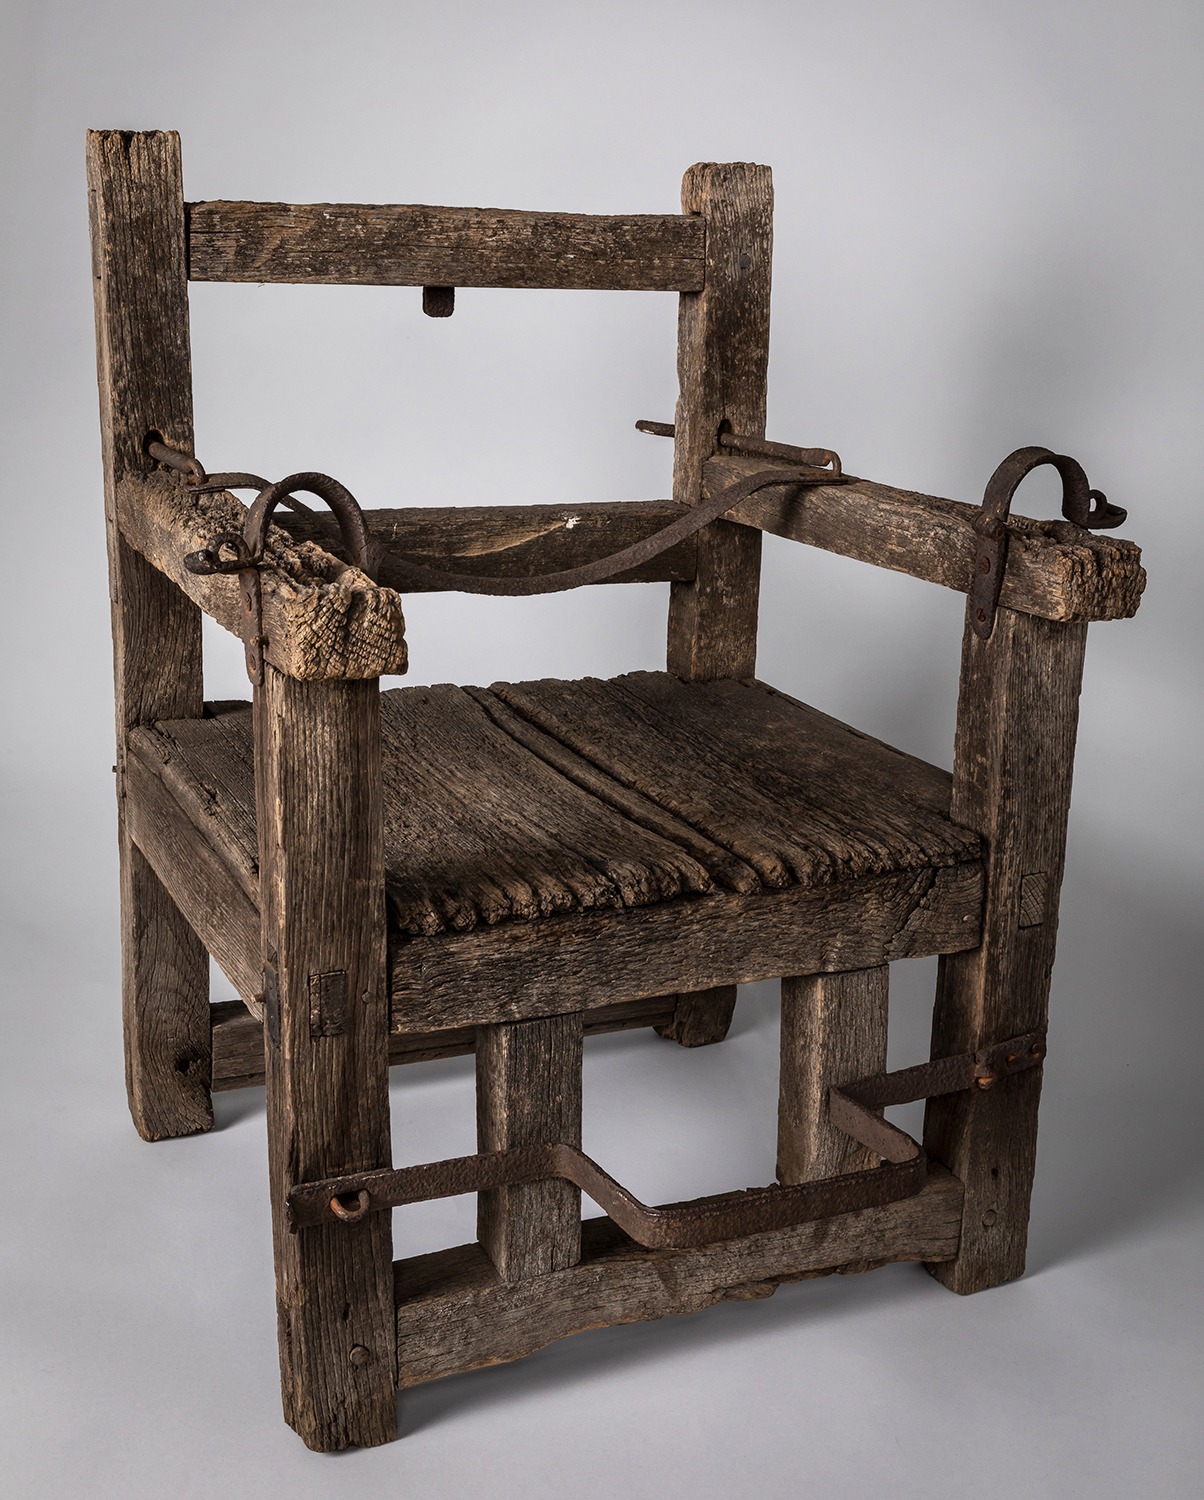 Ducking chair, English, traditional 17th century, Jamestown-Yorktown Foundation Collection.